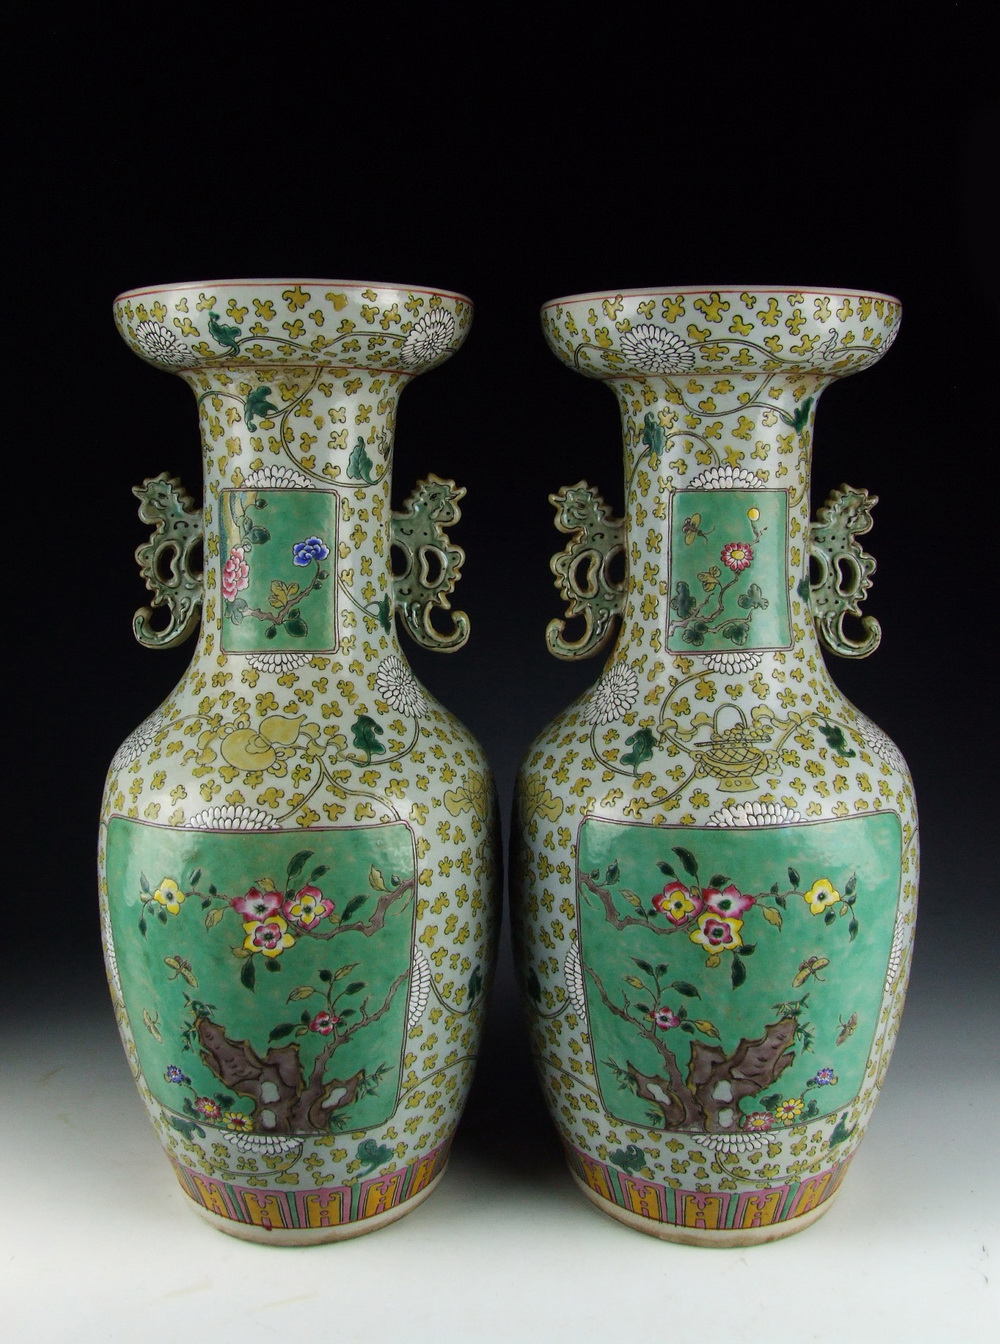 Pair of Chinese Antique Famille Rose Porcelain Vases w Bird | eBay